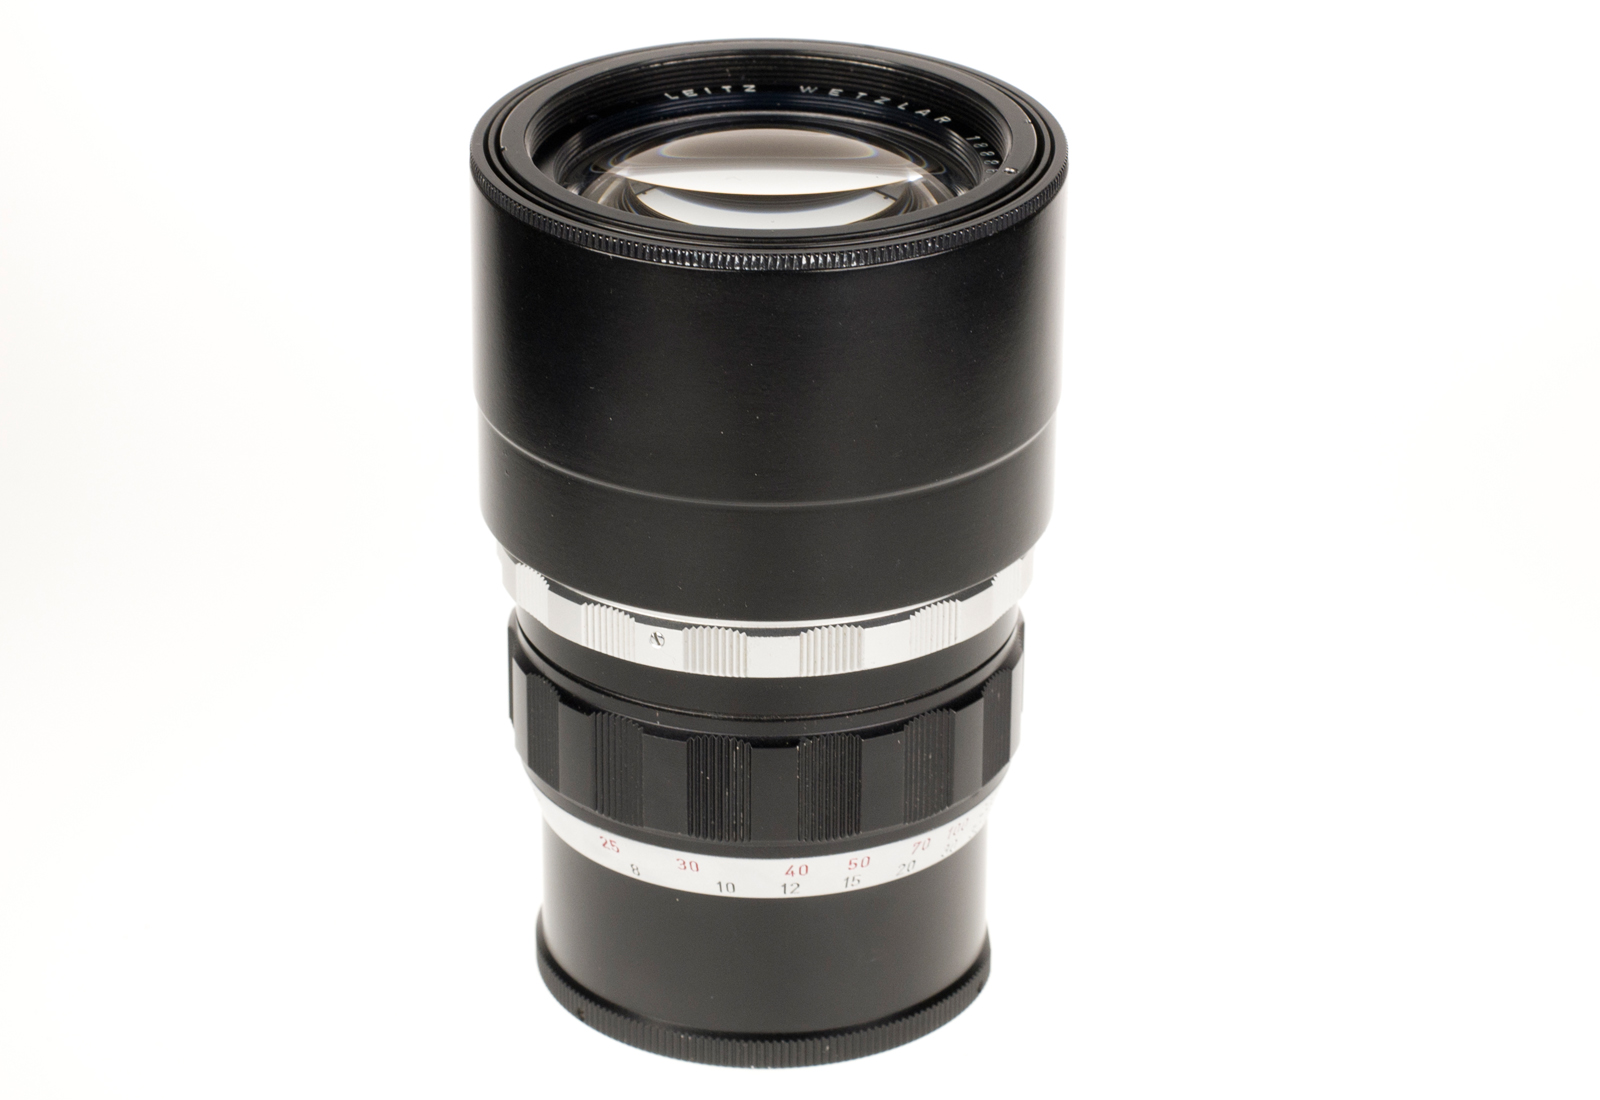 Leica MD, chrom + Telyt 1:4/200mm, schwarz + Visoflex II